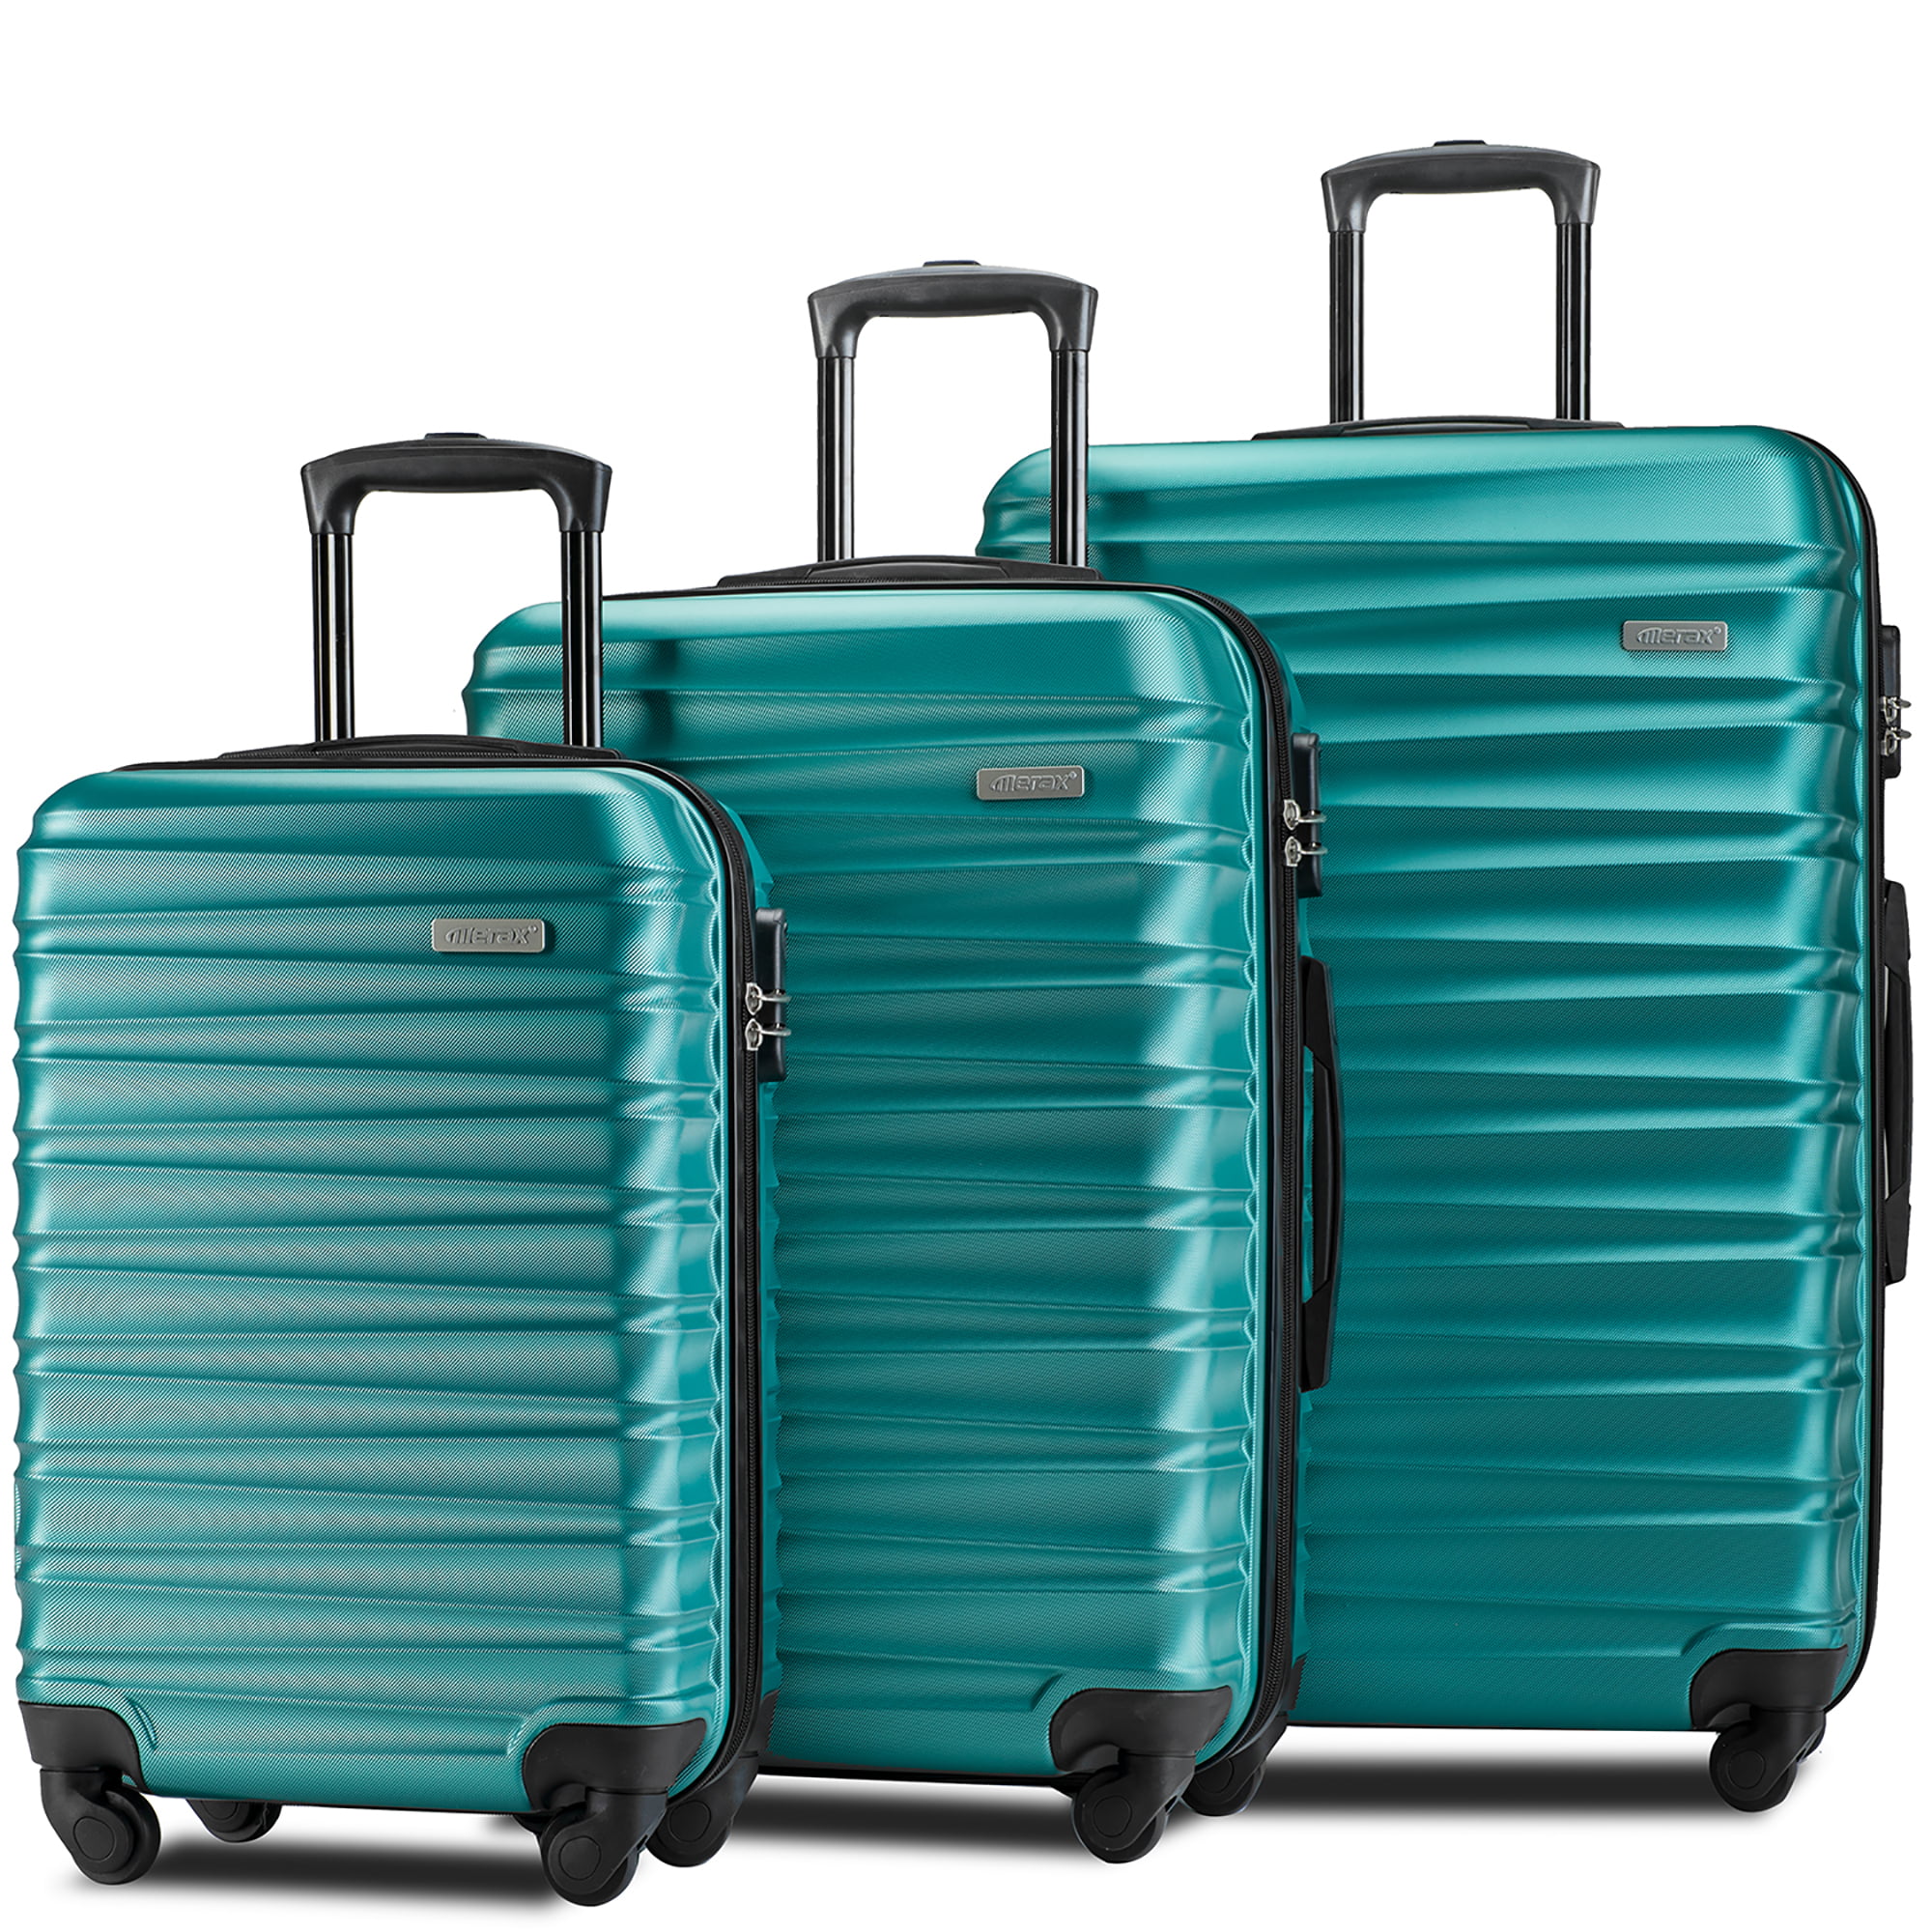 travel and leisure lightweight luggage